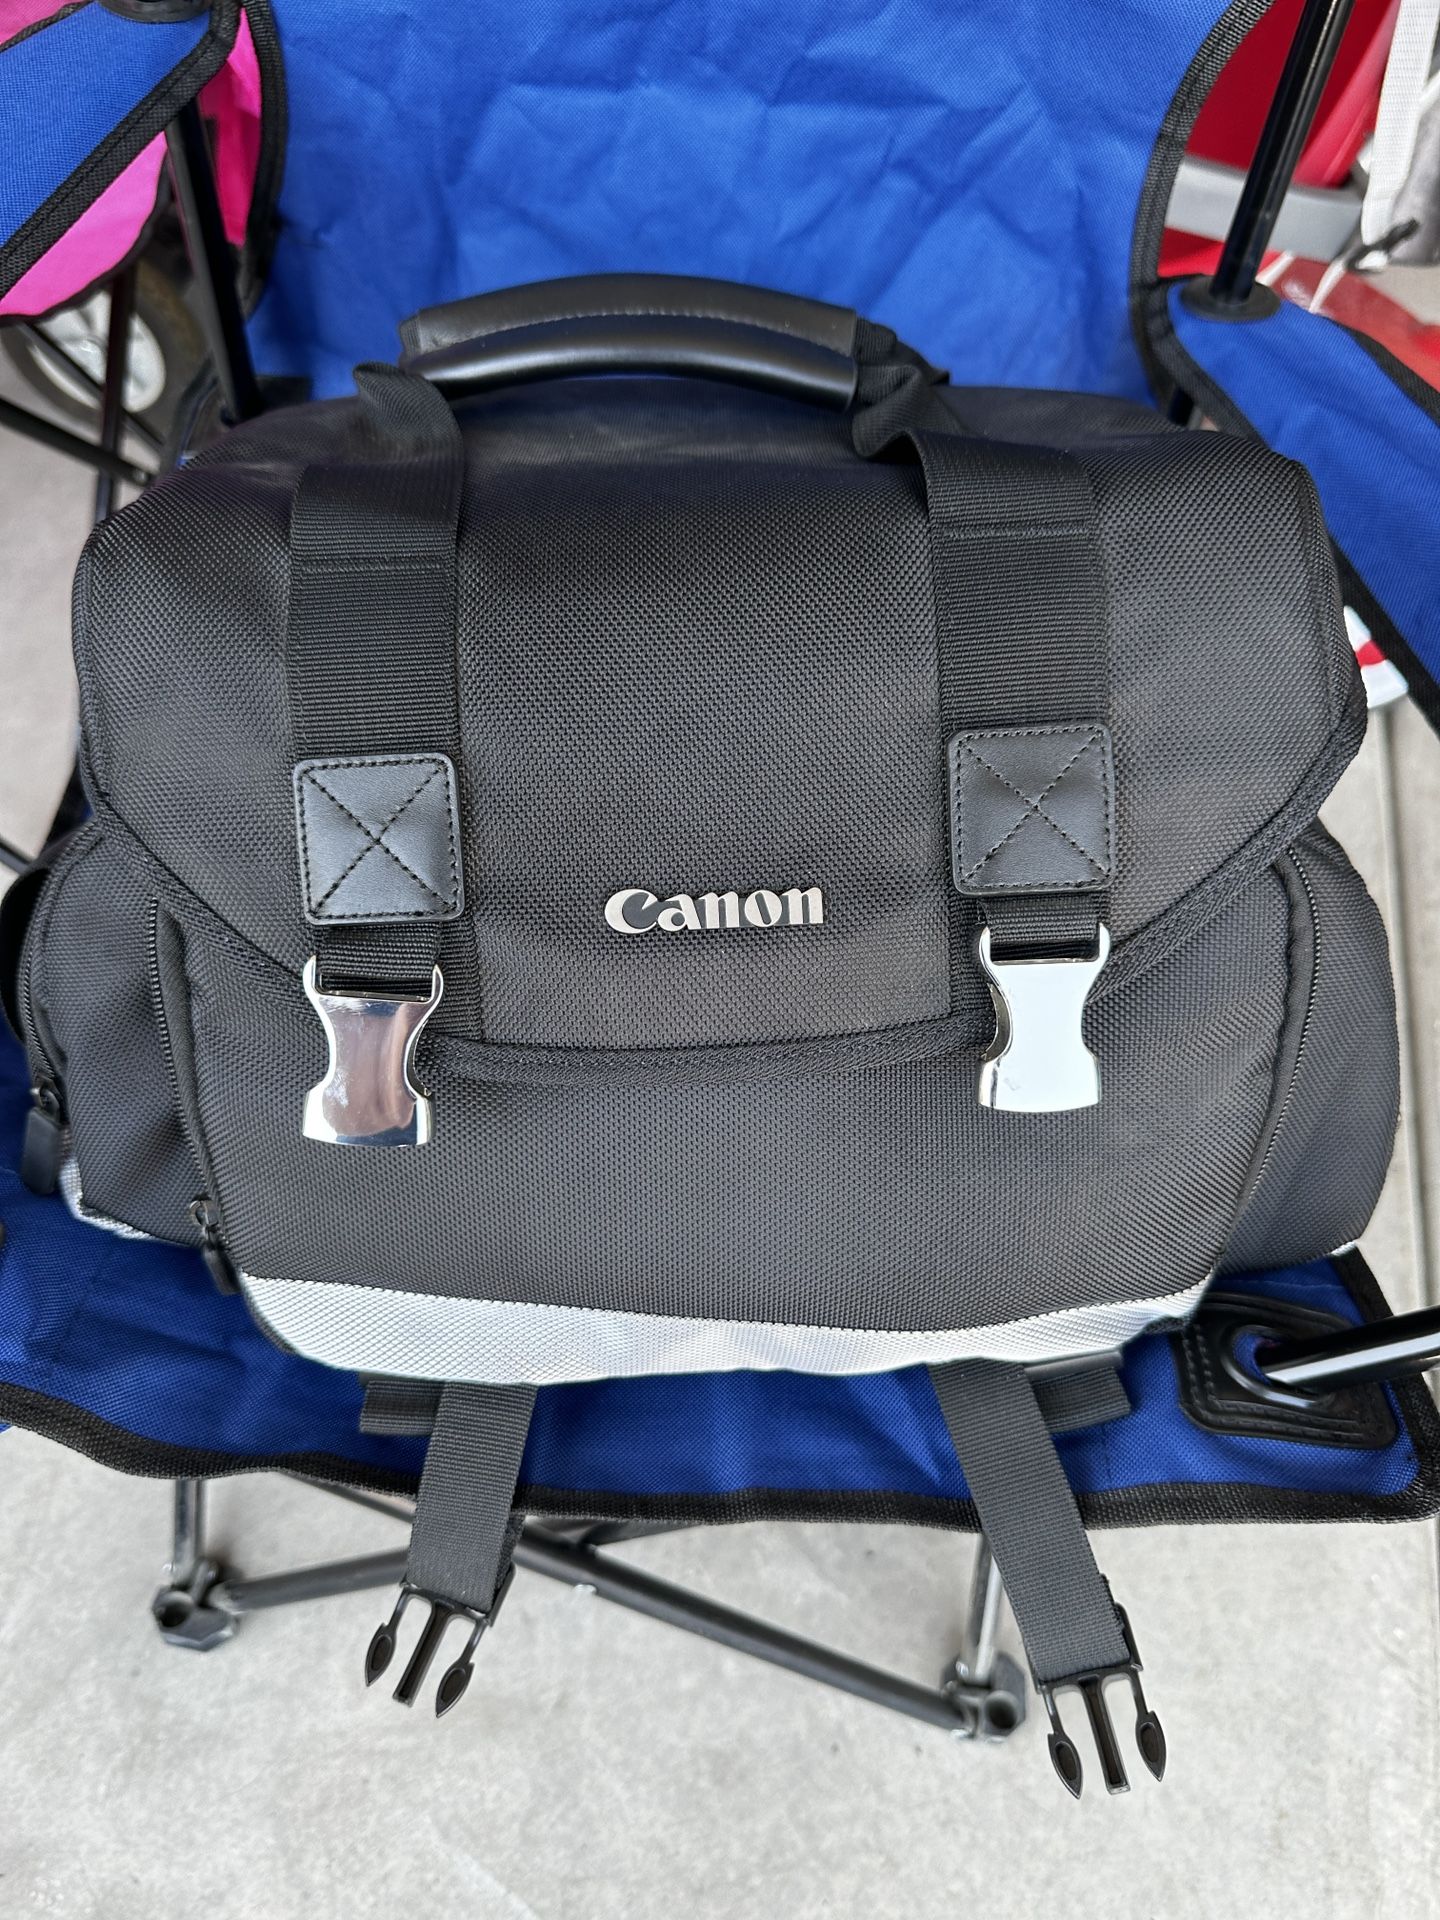 Canon Camera Bag With Accessories 